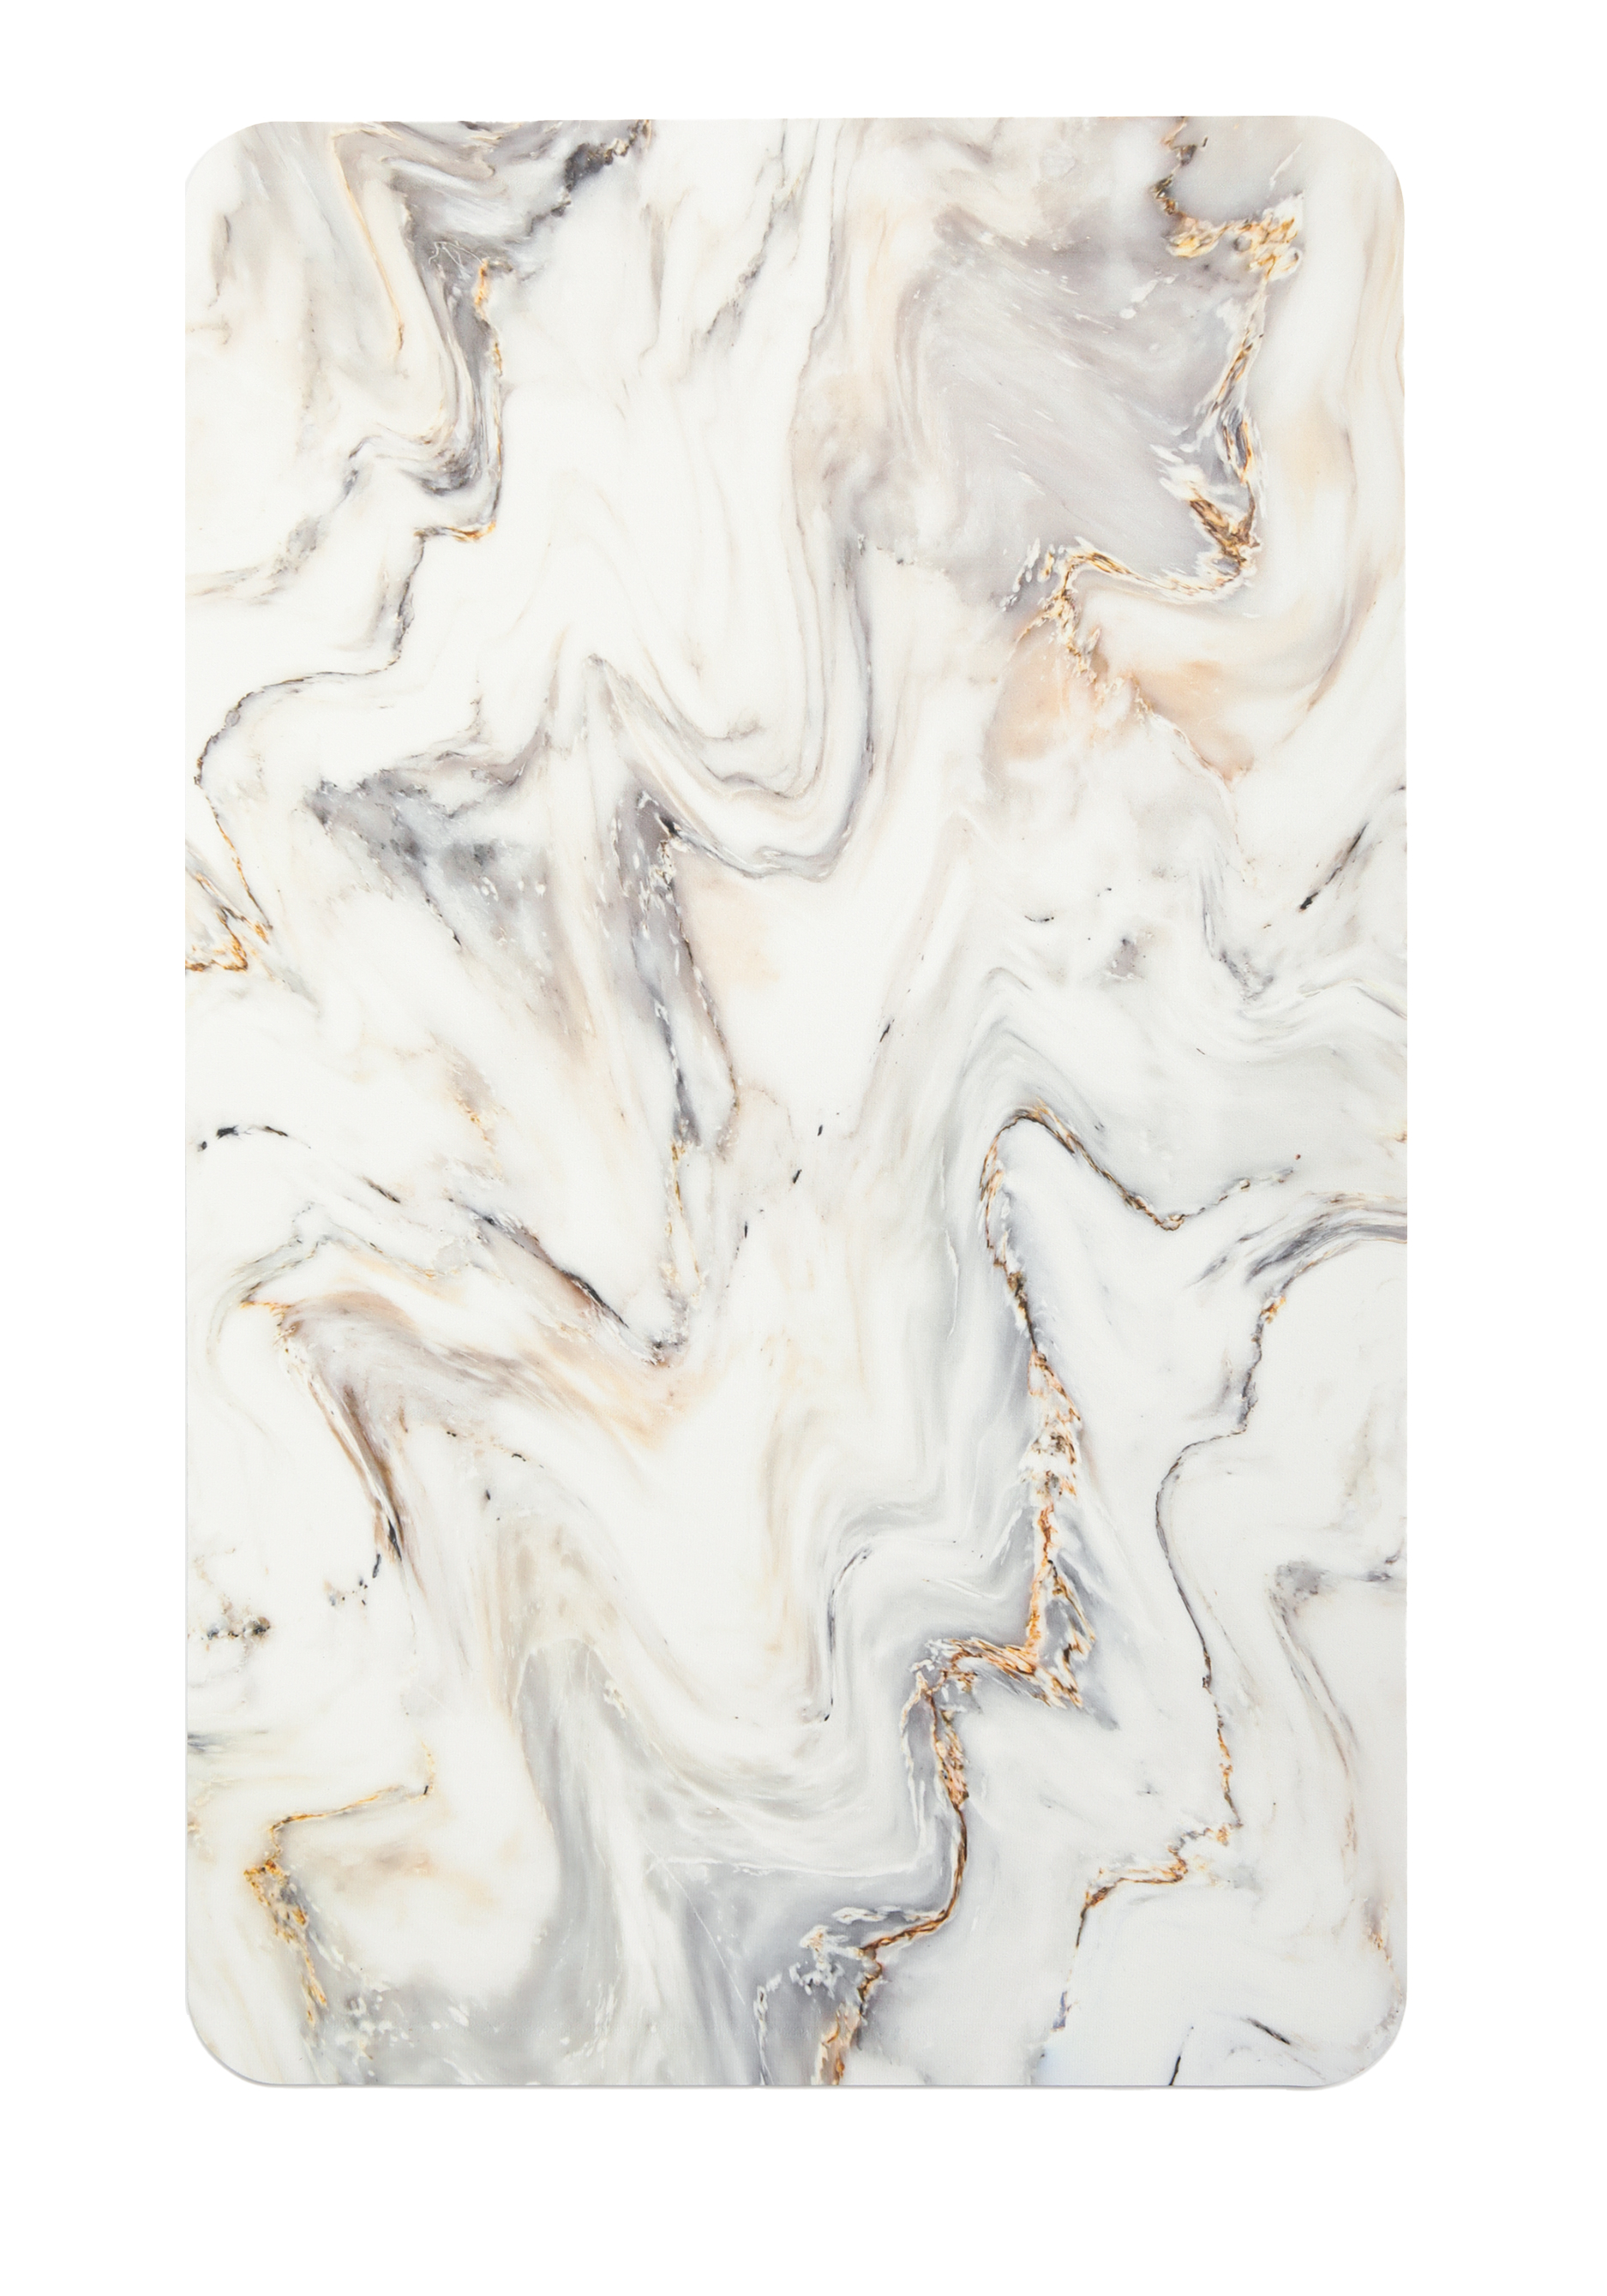 Коврик для ванной "Мрамор", цвет белый мрамор, размер 50*80 - фото 1